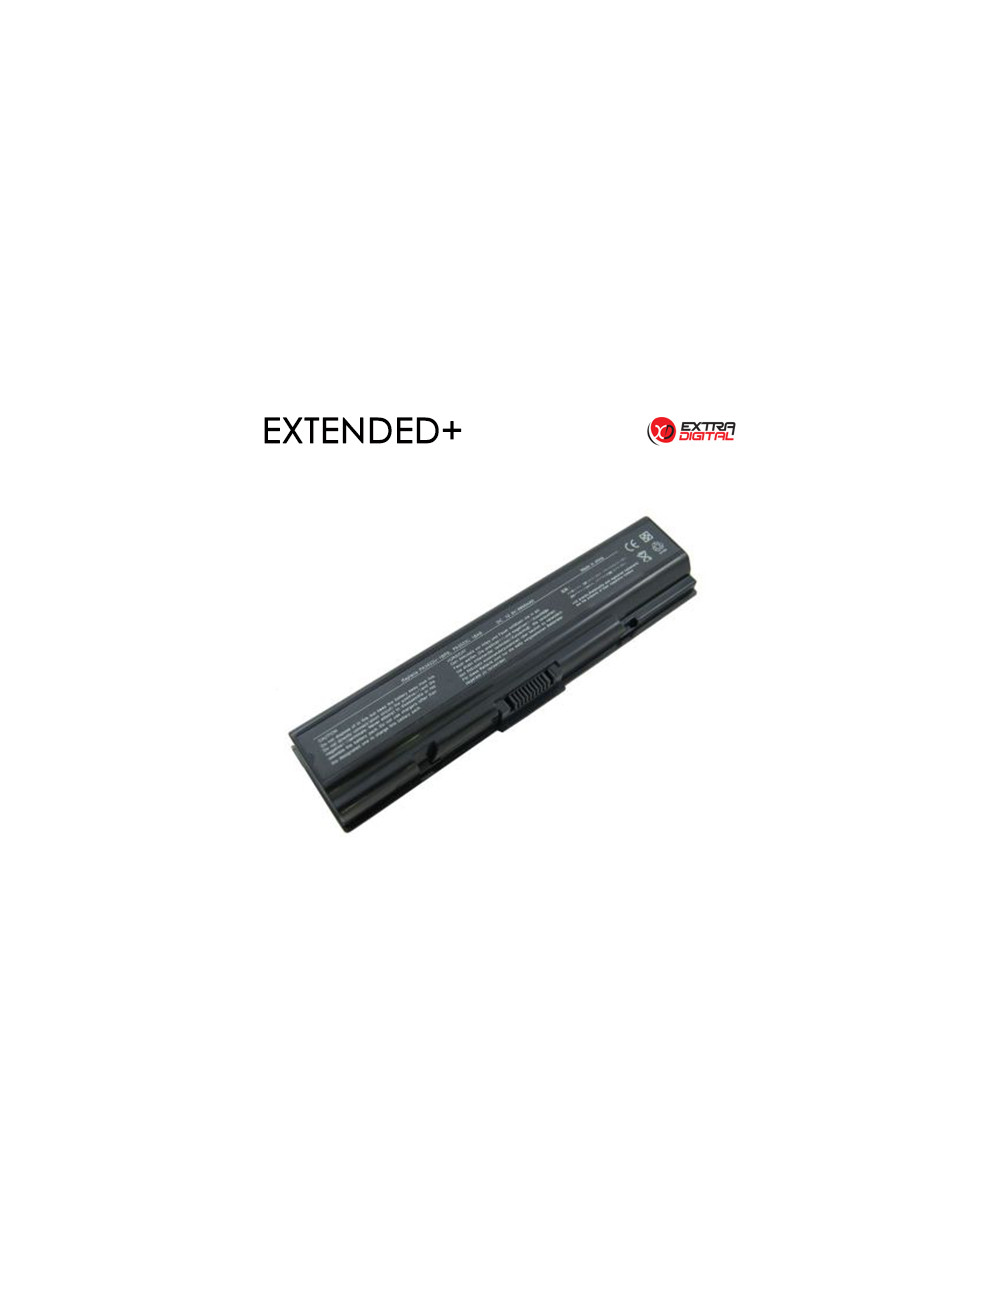 Notebook battery, Extra Digital Extended +, TOSHIBA PA3533U-1BRS, 8800mAh